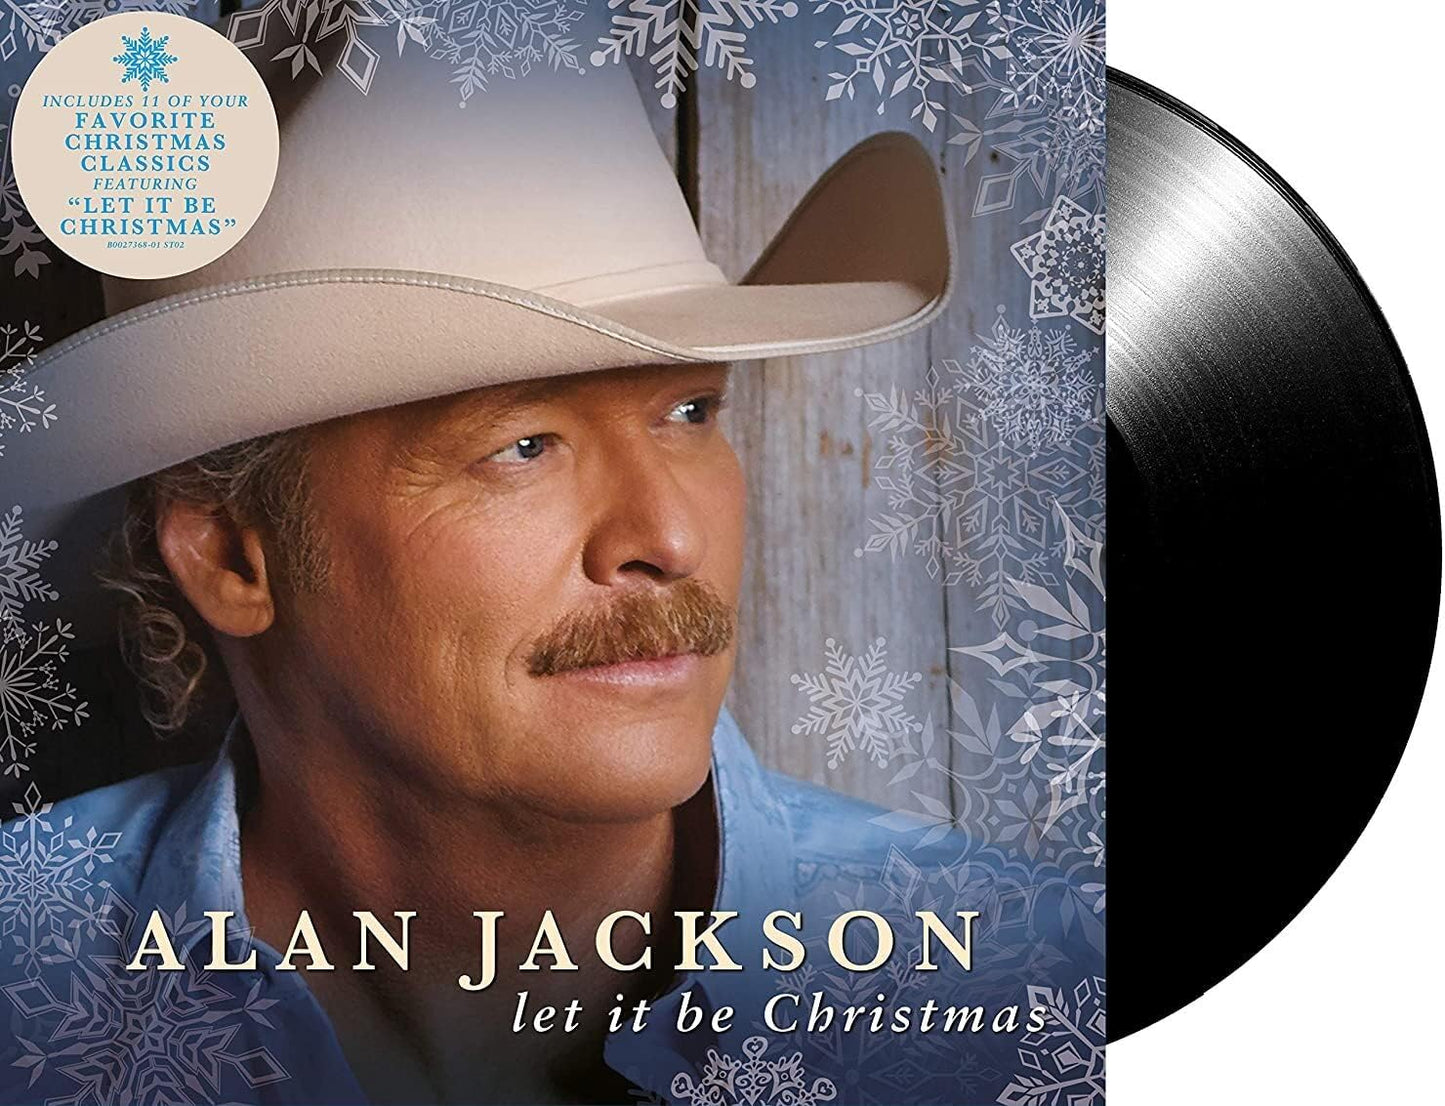 Let is be Christmas - Alan Jackson Vinyl